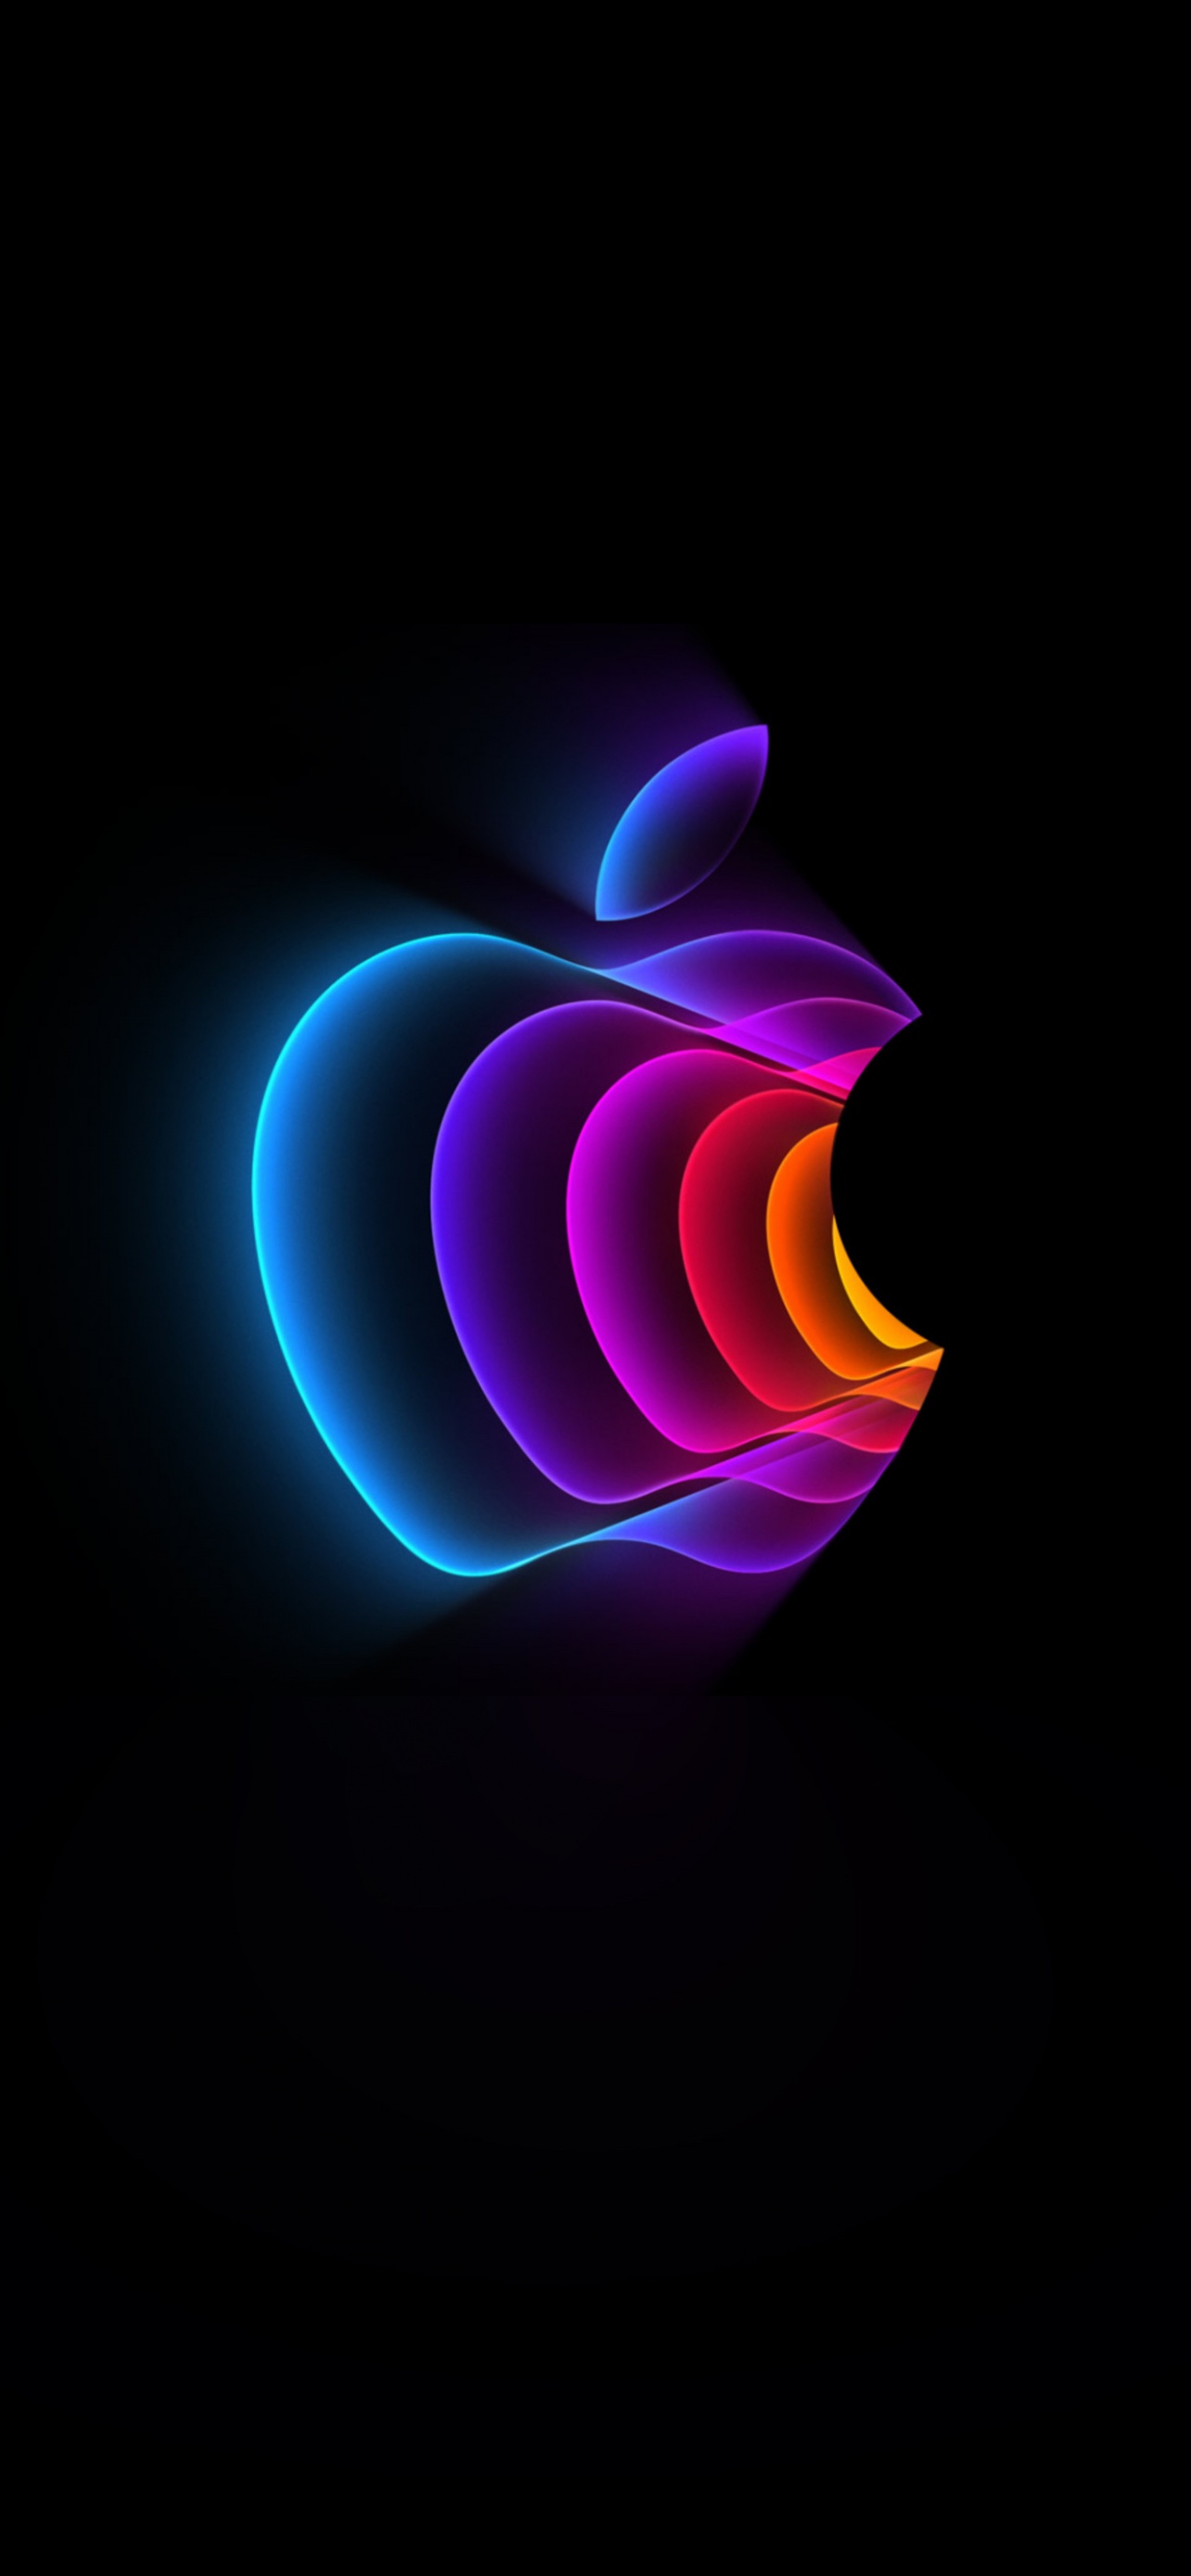 Apple Event 2022 Wallpaper 4K, Colorful, Apple logo, Technology